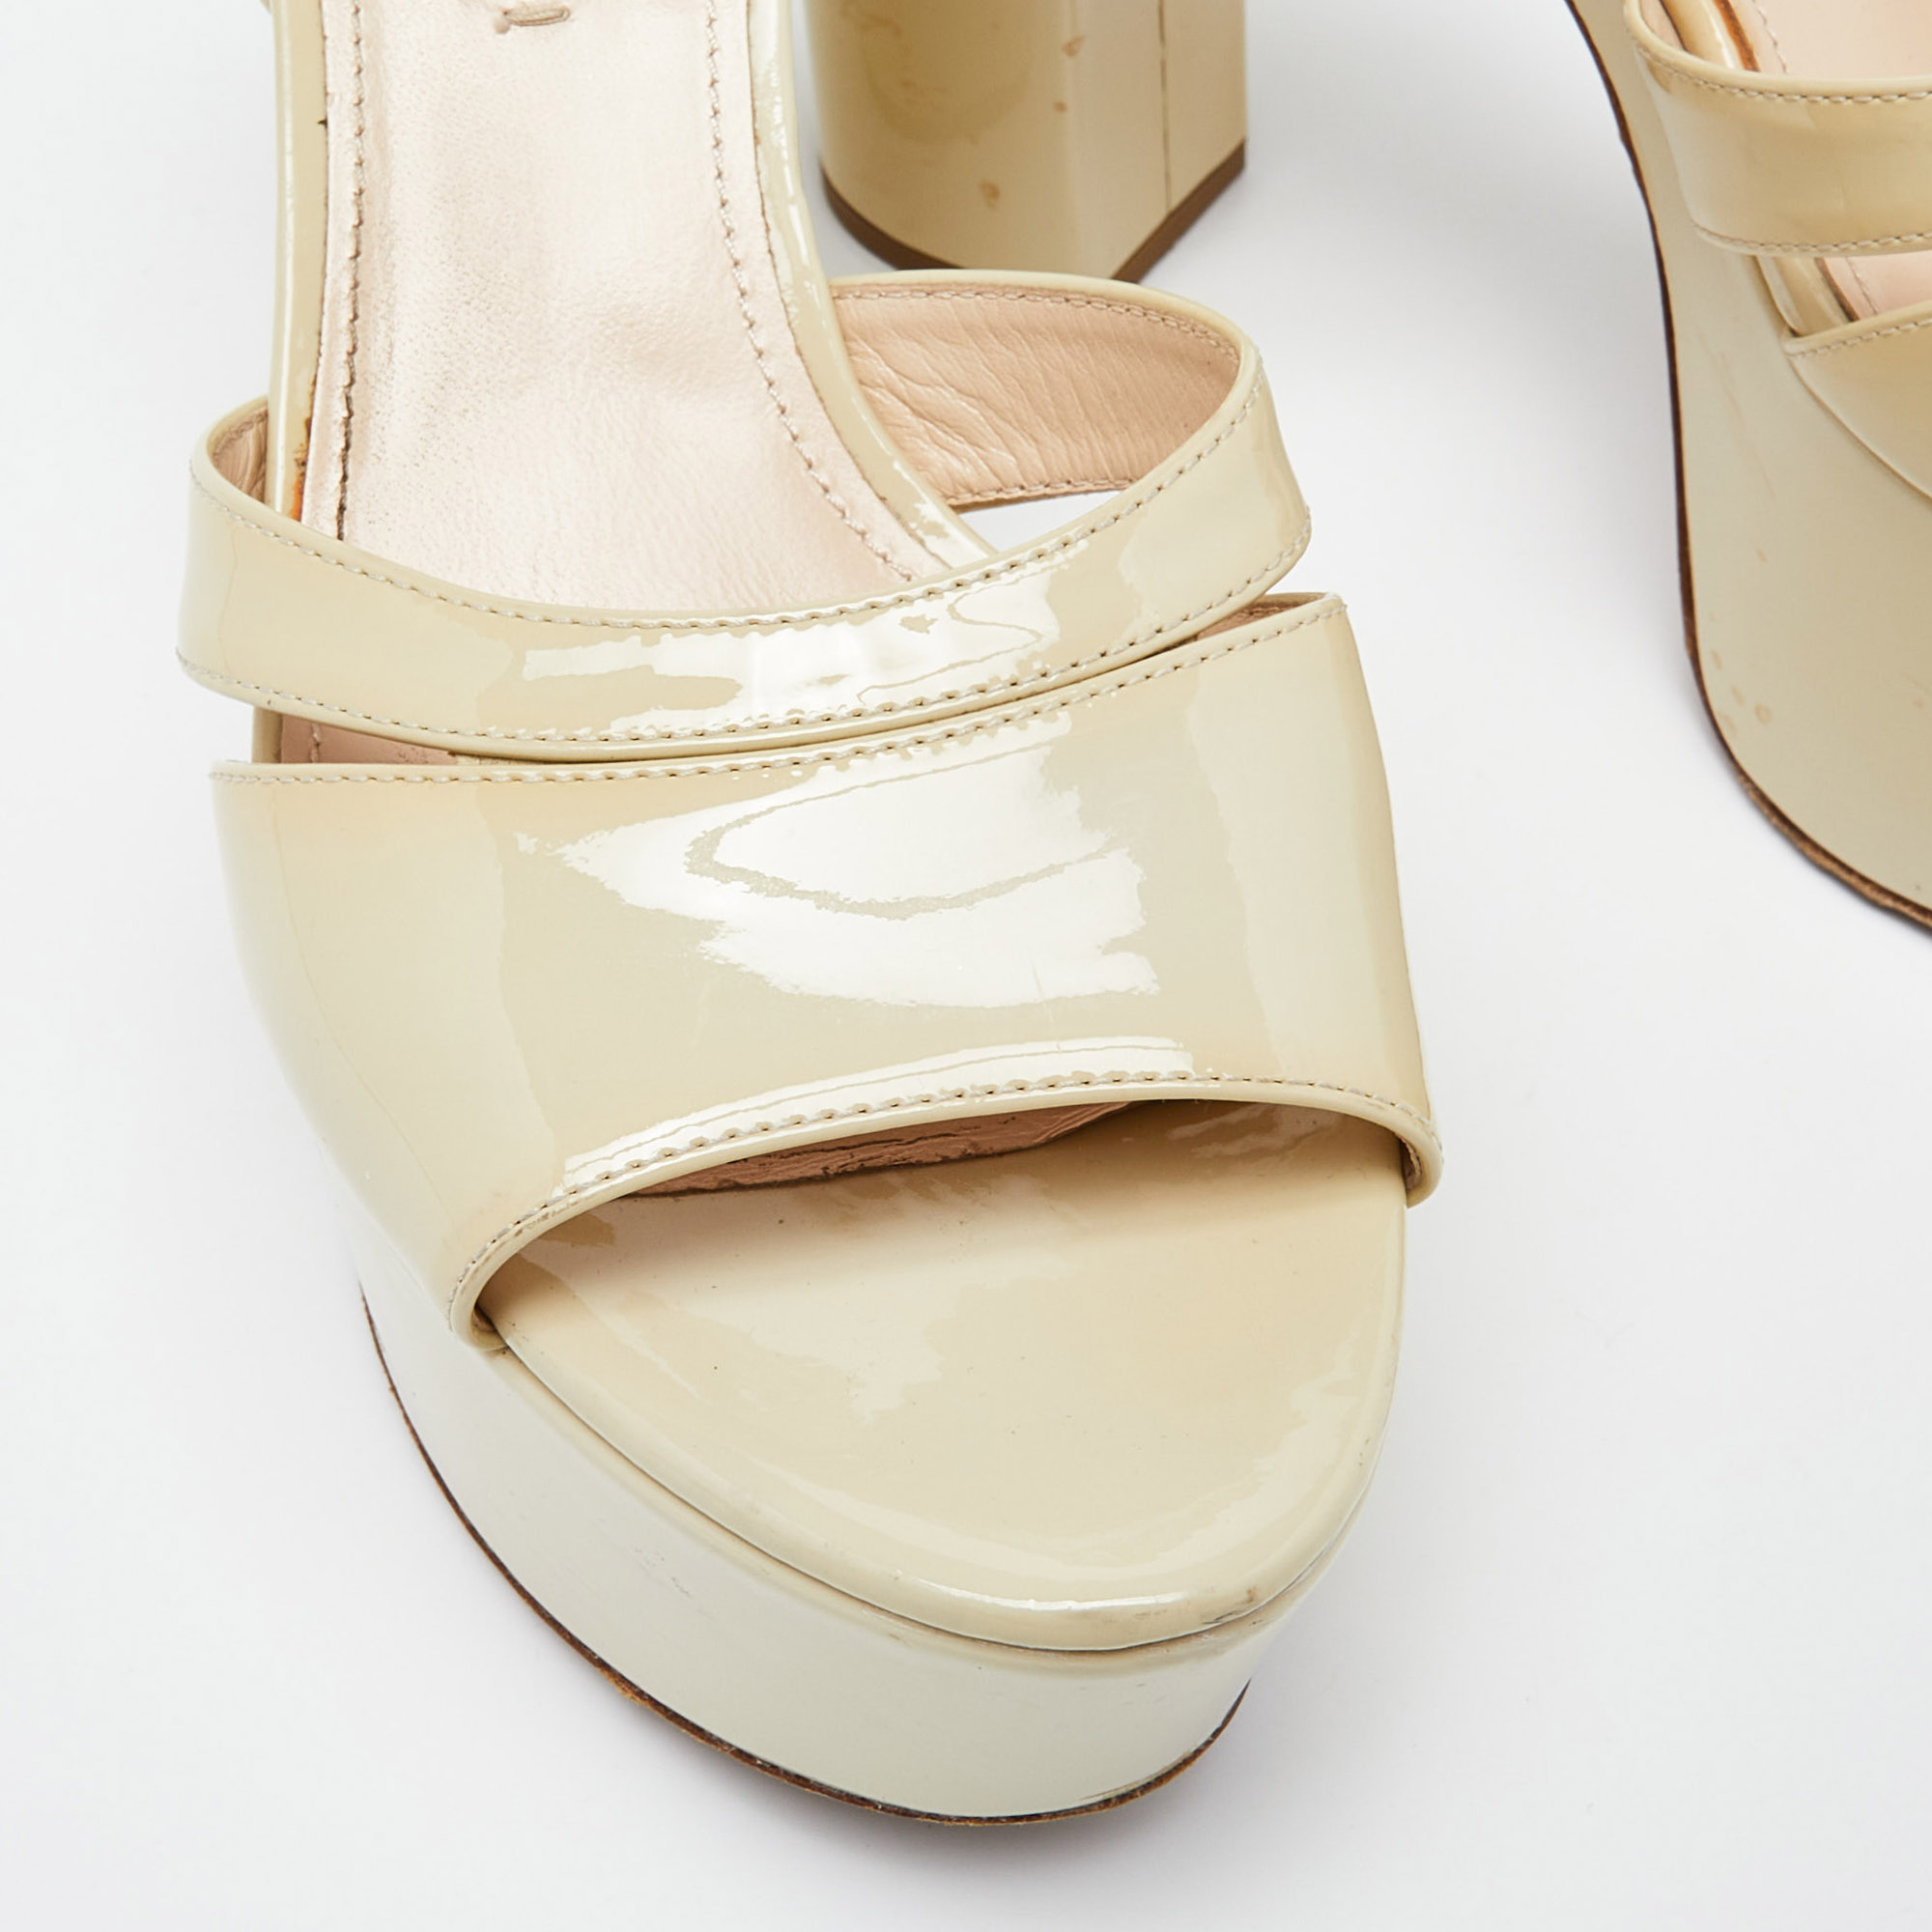 Prada Beige Patent Leather Platform Ankle Strap Sandals Size 37.5